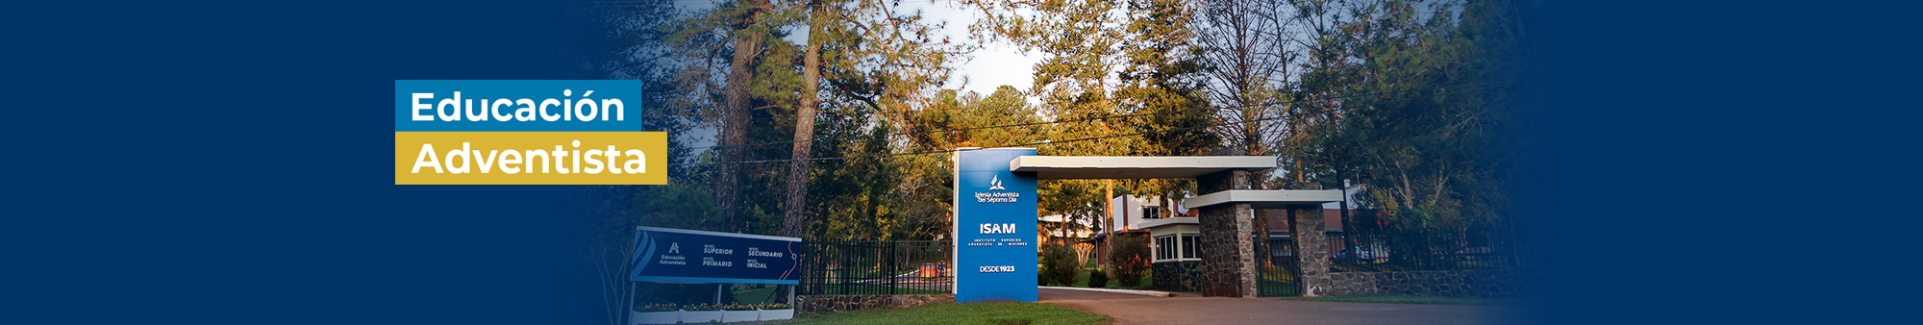 Campus ISAM  - Portico Educacion Adventista